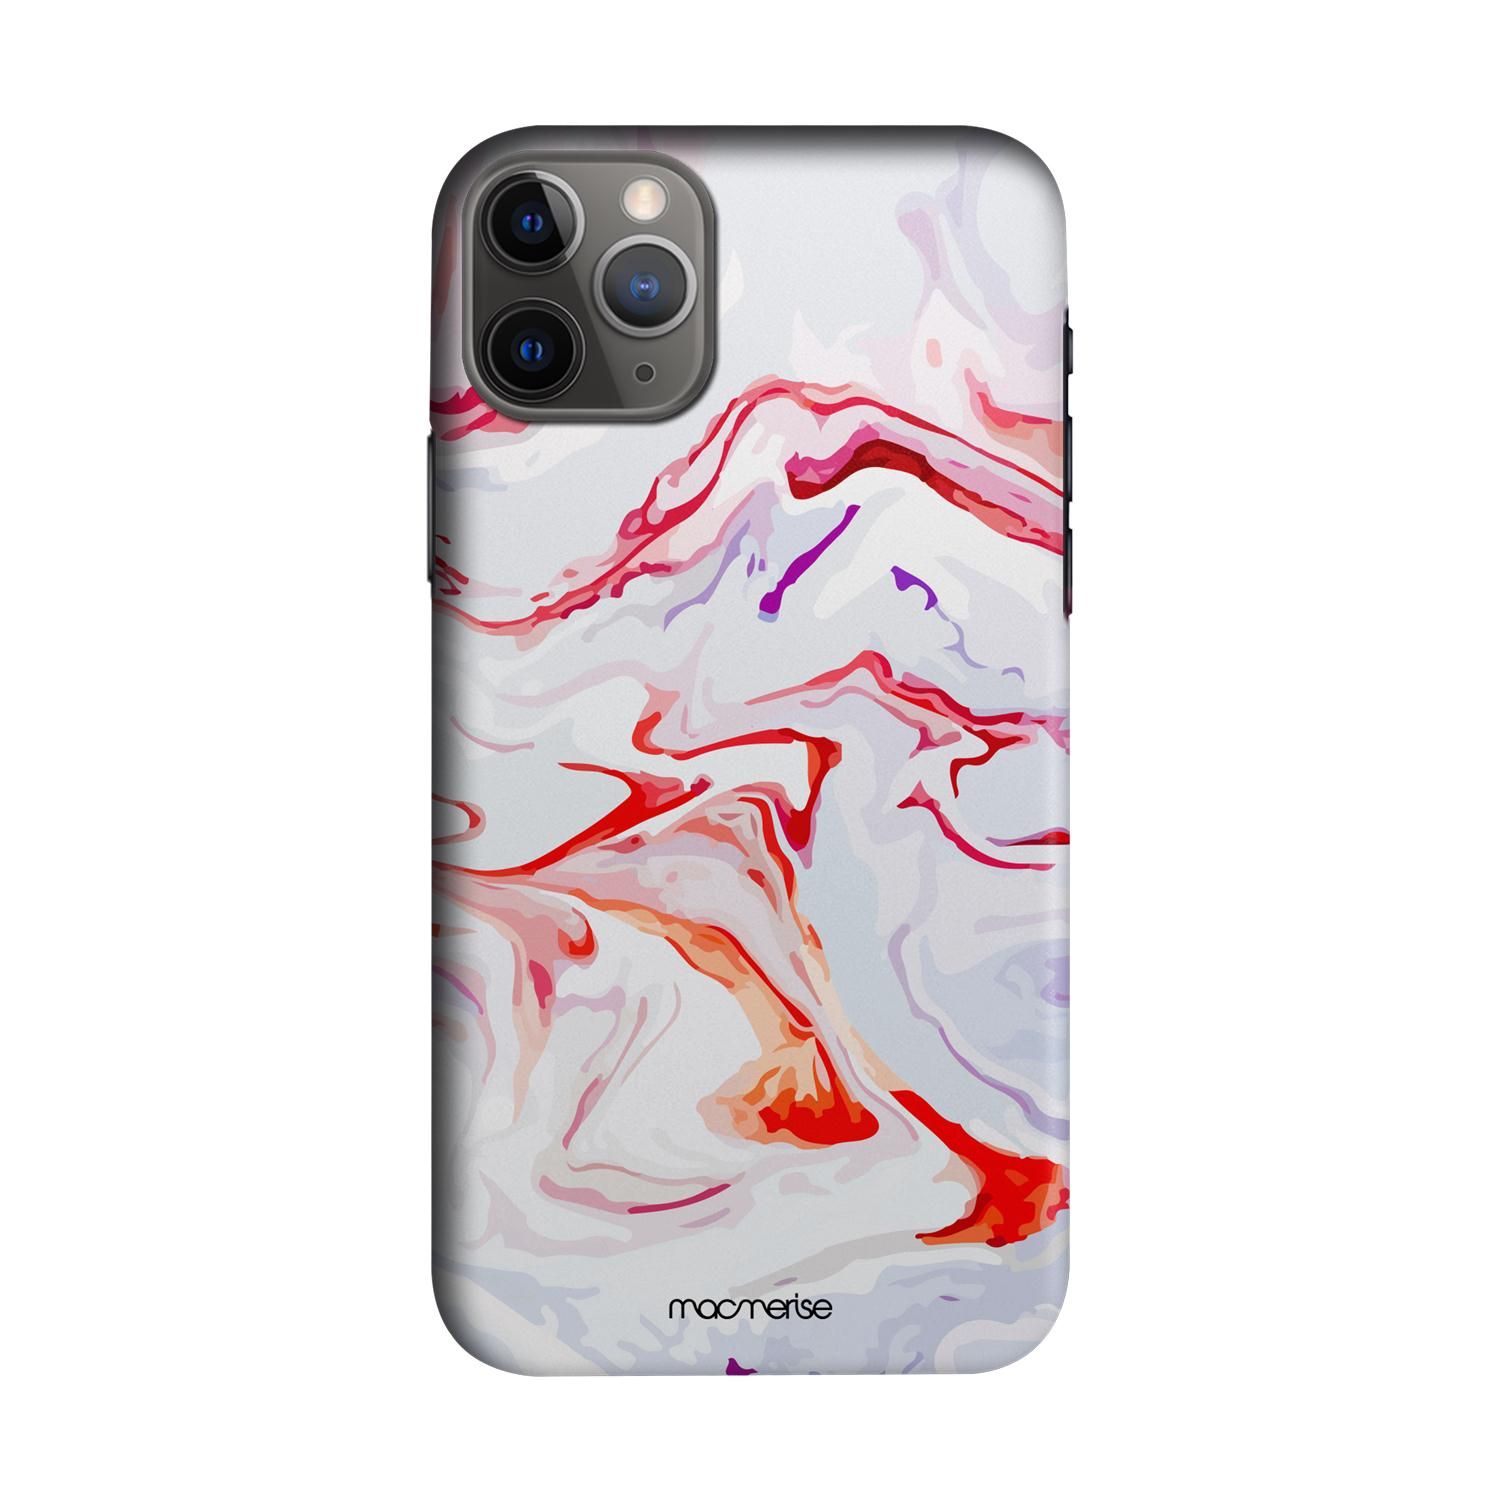 Buy Liquid Funk Marble - Sleek Phone Case for iPhone 11 Pro Max Online